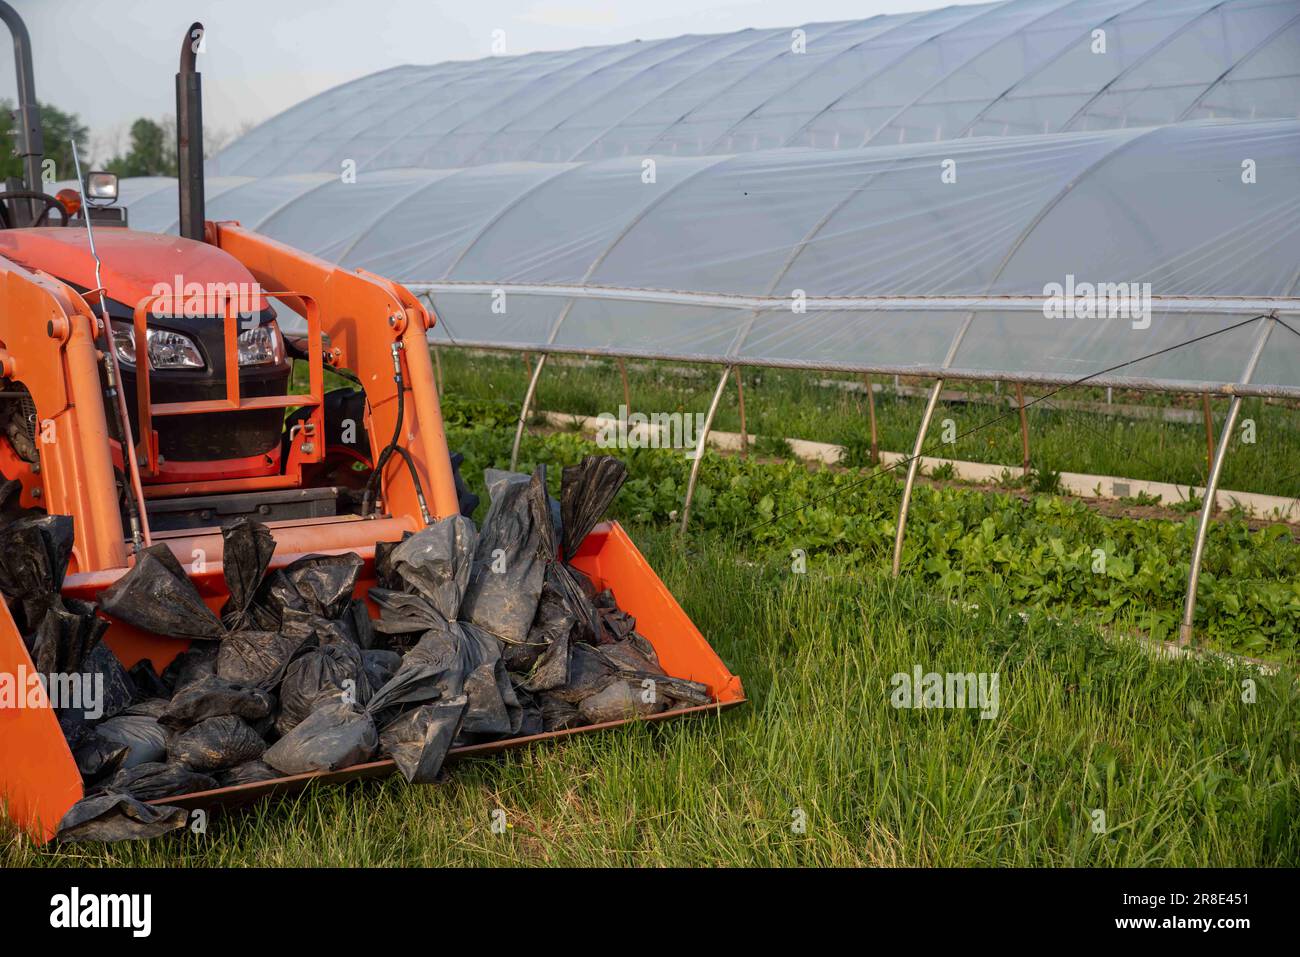 Orange farm tractor with sandbags by organic vegetable greenhouse Stock Photo